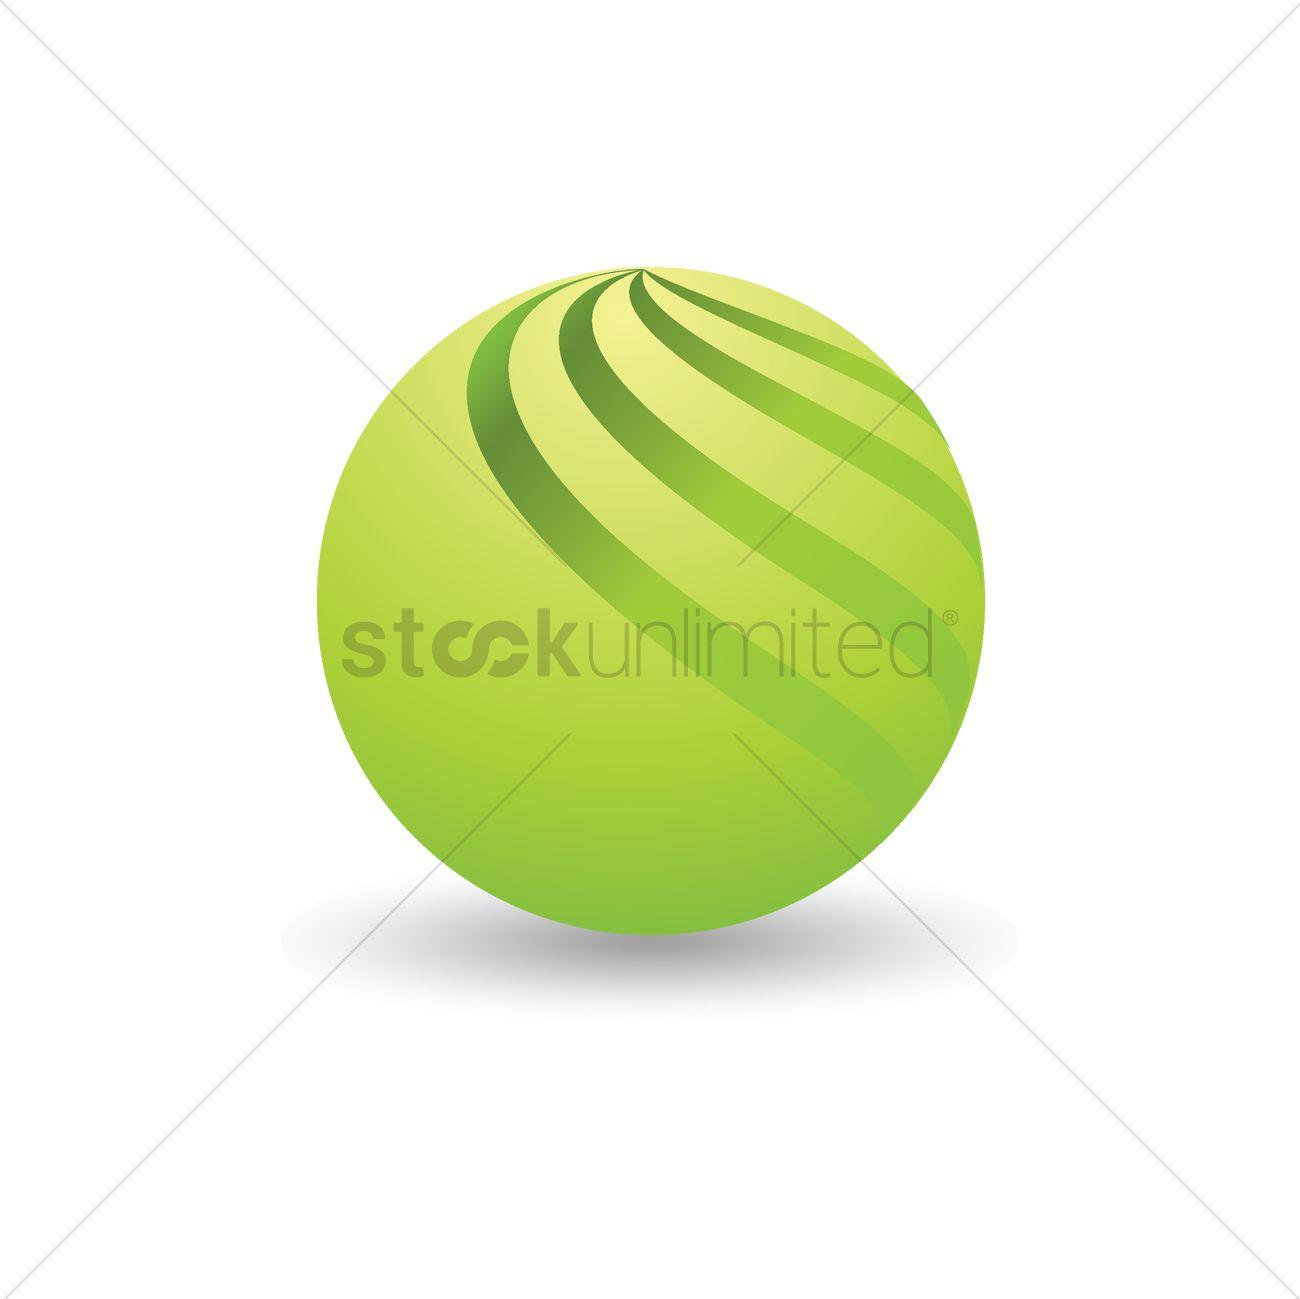 Spherical Logo - Spherical logo element design Vector Image - 2004463 | StockUnlimited